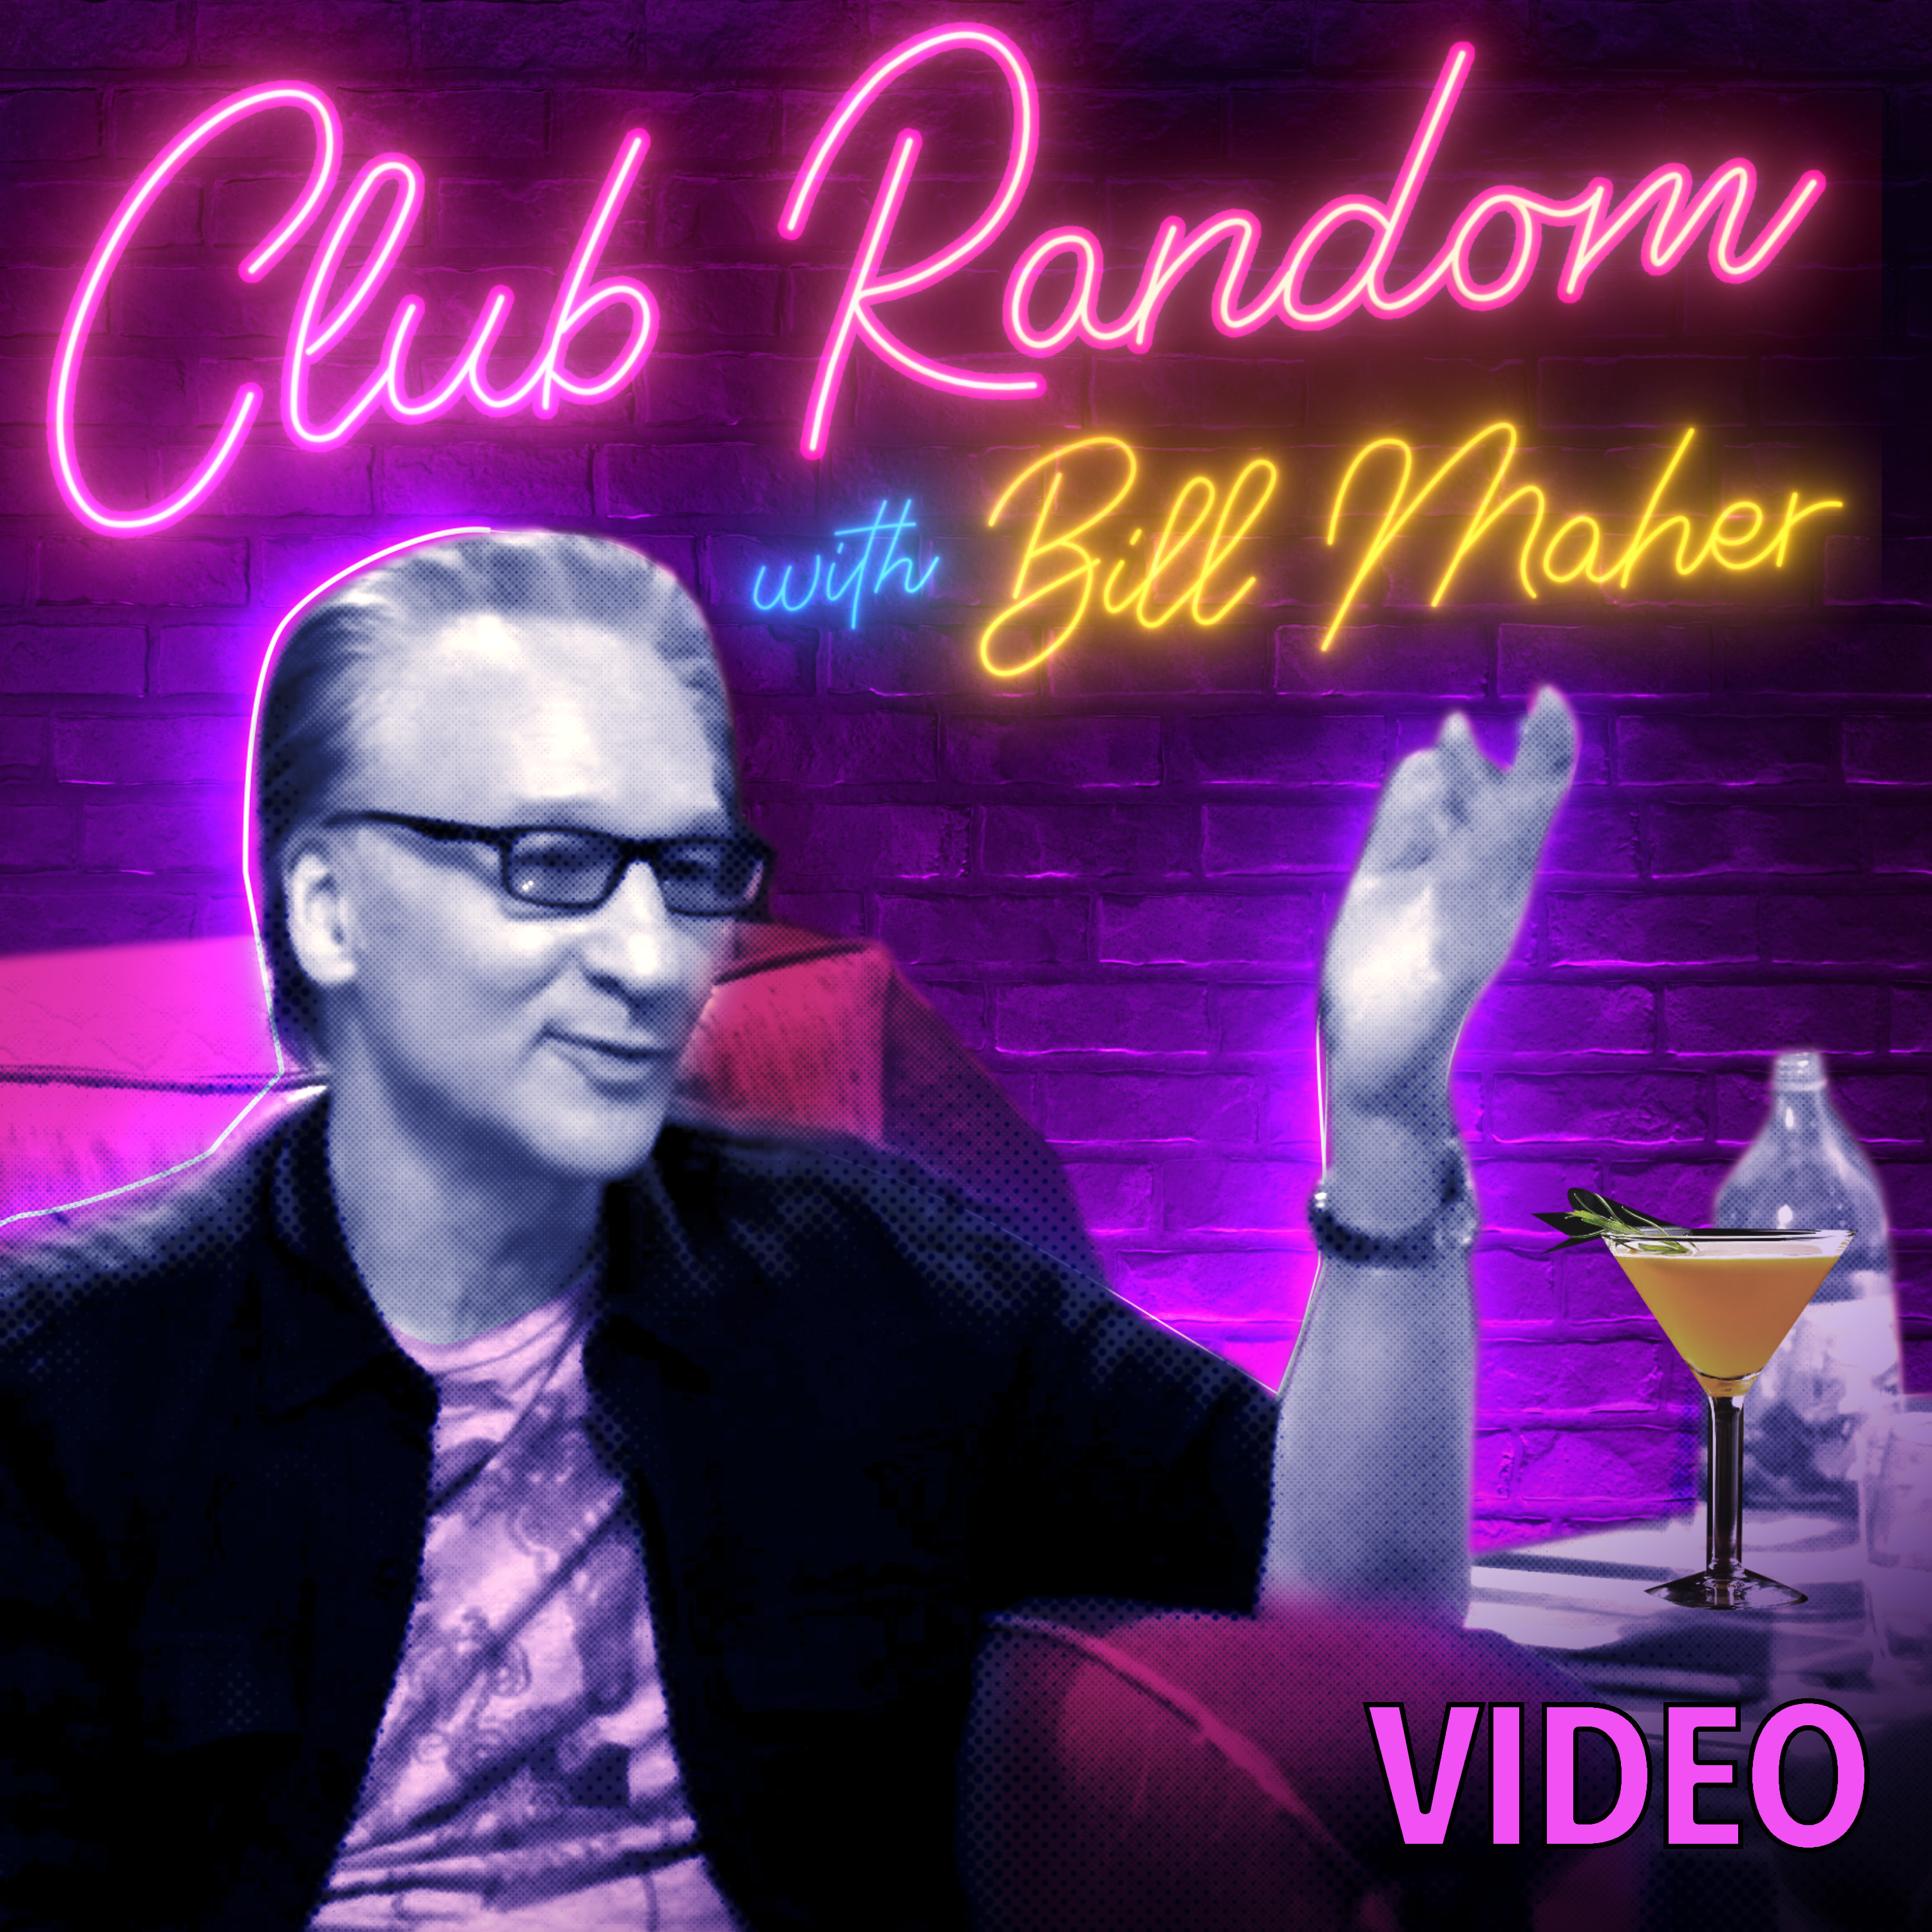 Video: Olivia Culpo | Club Random with Bill Maher